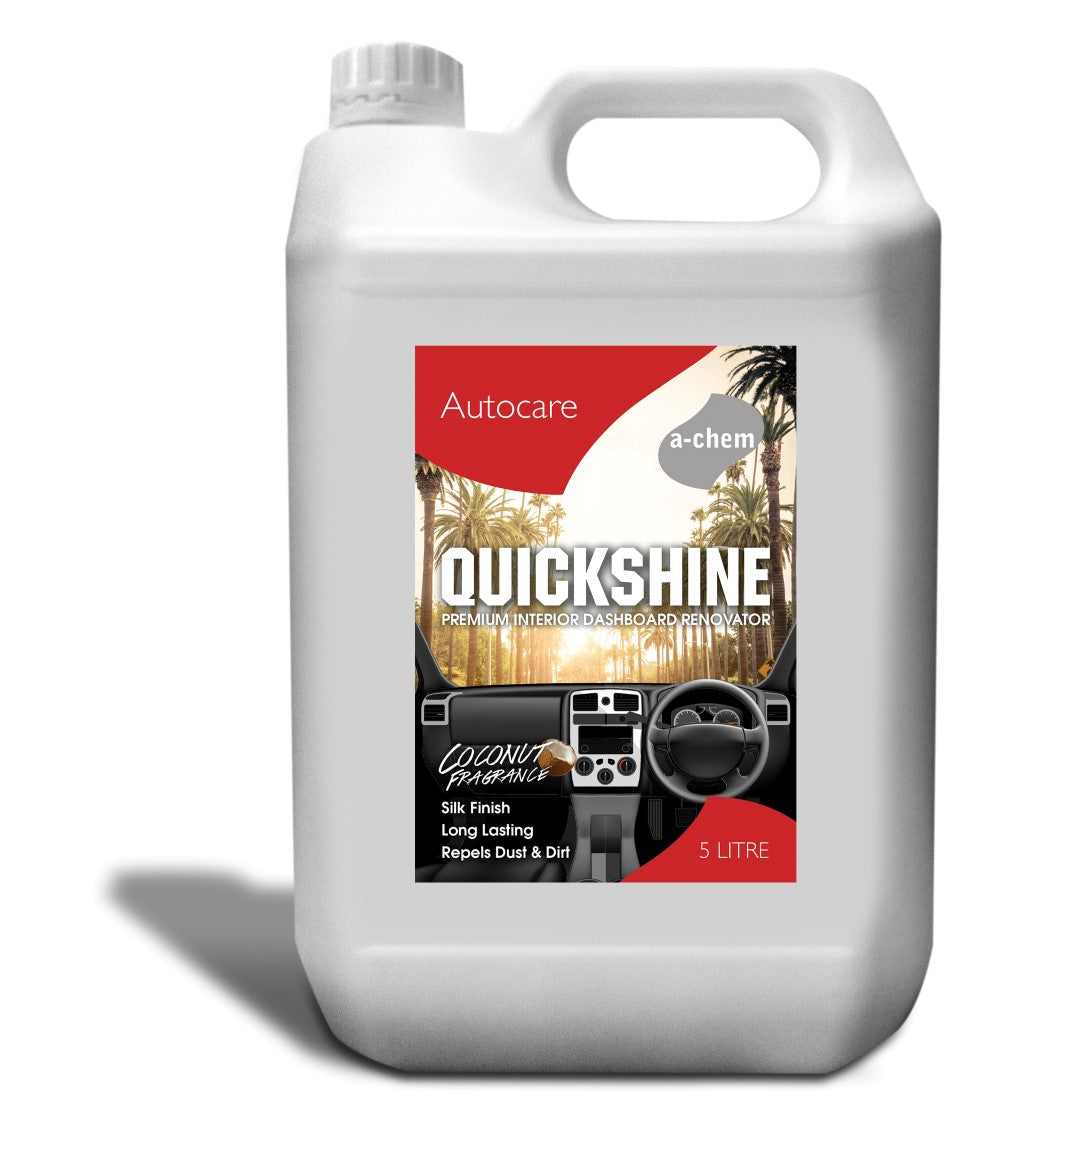 Achem Quickshine | Quick Shine 5 Ltr - Dashboard Renovator with Silk Finish